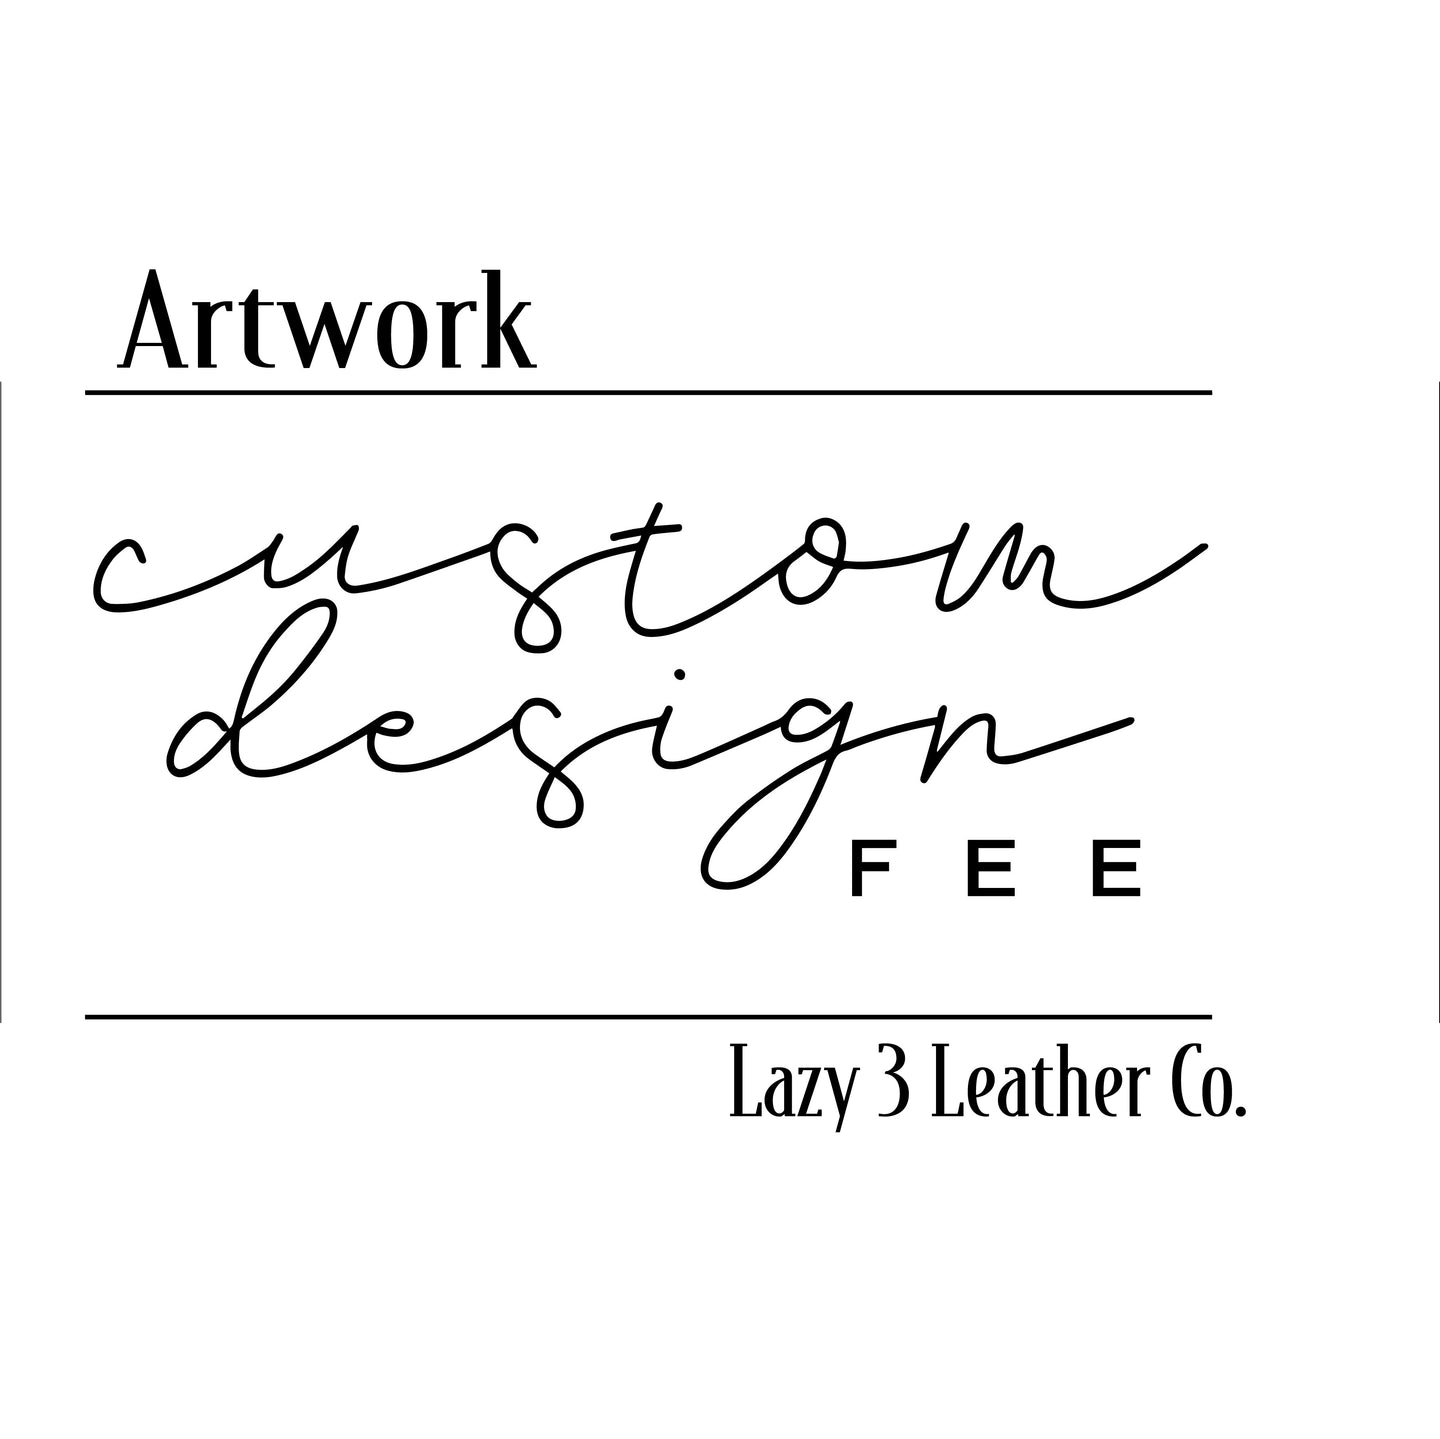 Artwork Design Fee, logo creation, add on item - Lazy 3 Leather Company